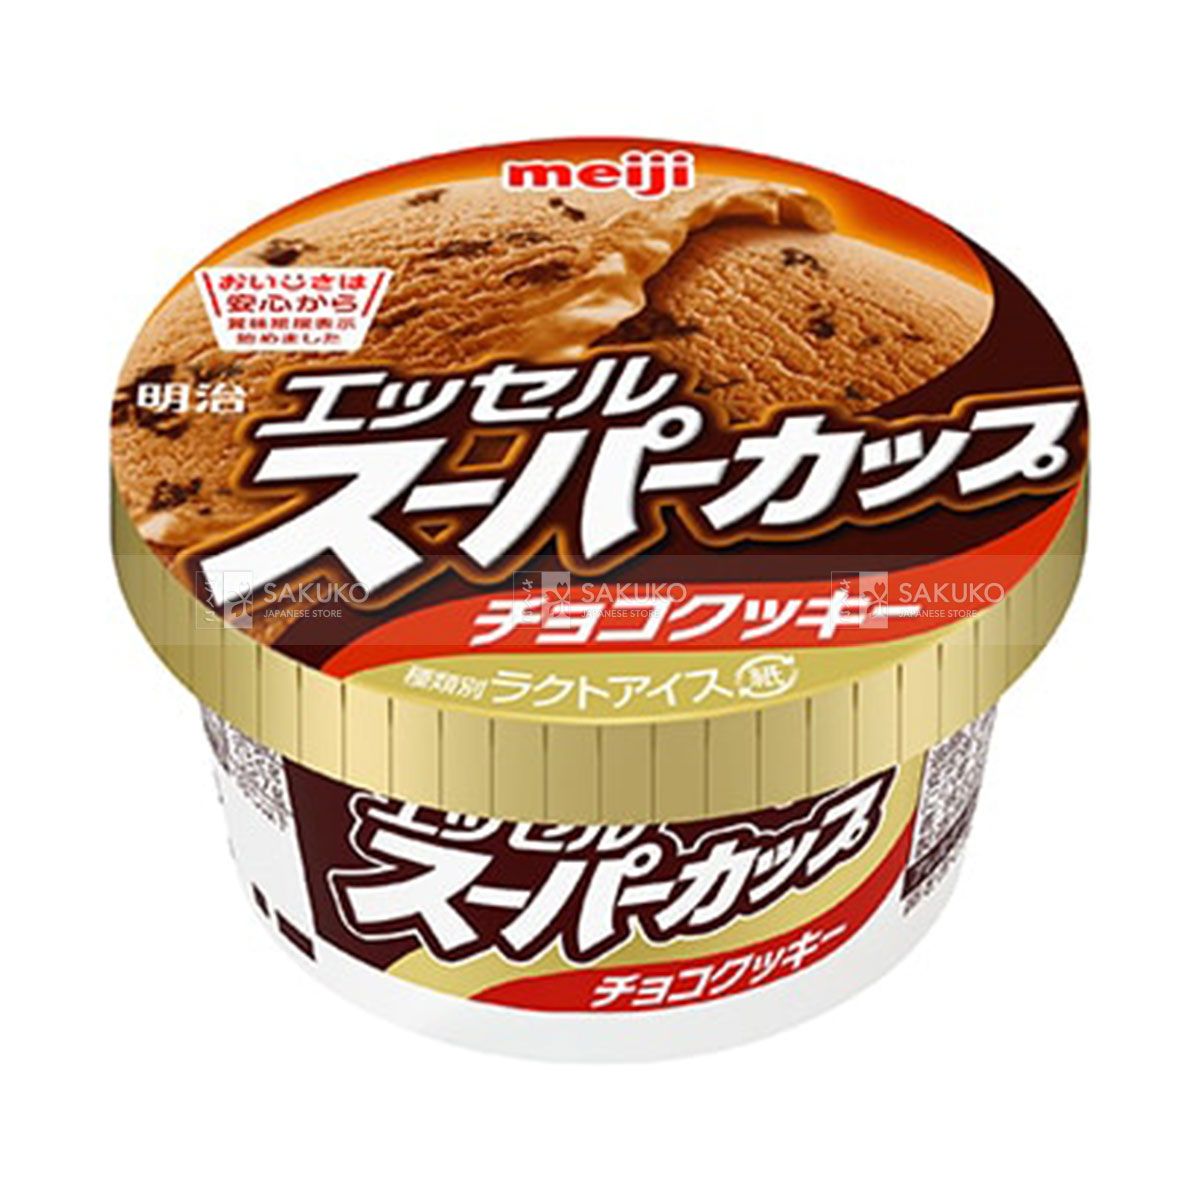  MEIJI- Kem hộp Super Cup vị Choco Cookie 200ml 